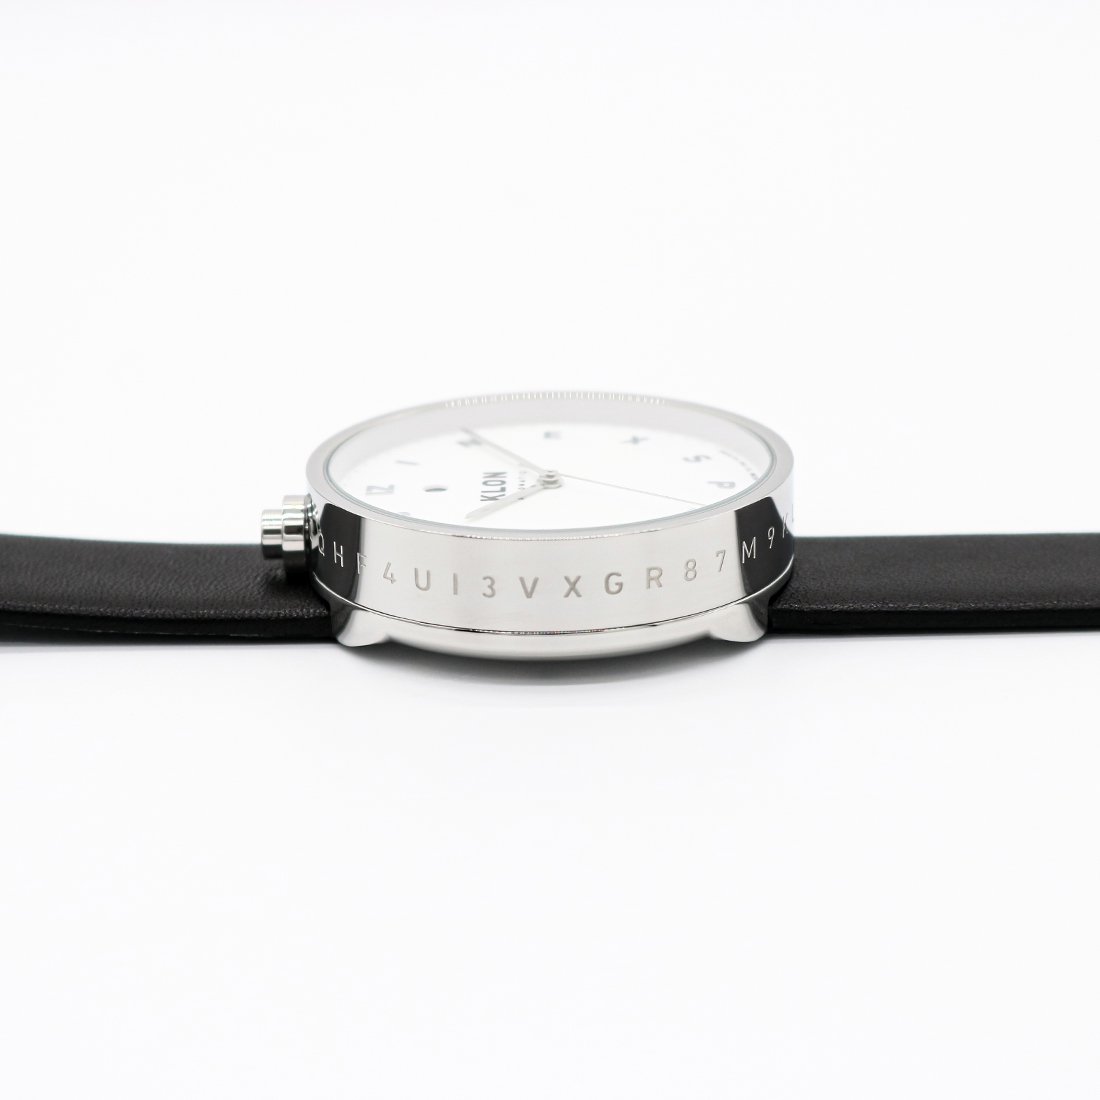 KLON AUTOMATIC WATCH BLACK LEATHER -MOCK NUMBER- 43mm カジュアル 腕時計